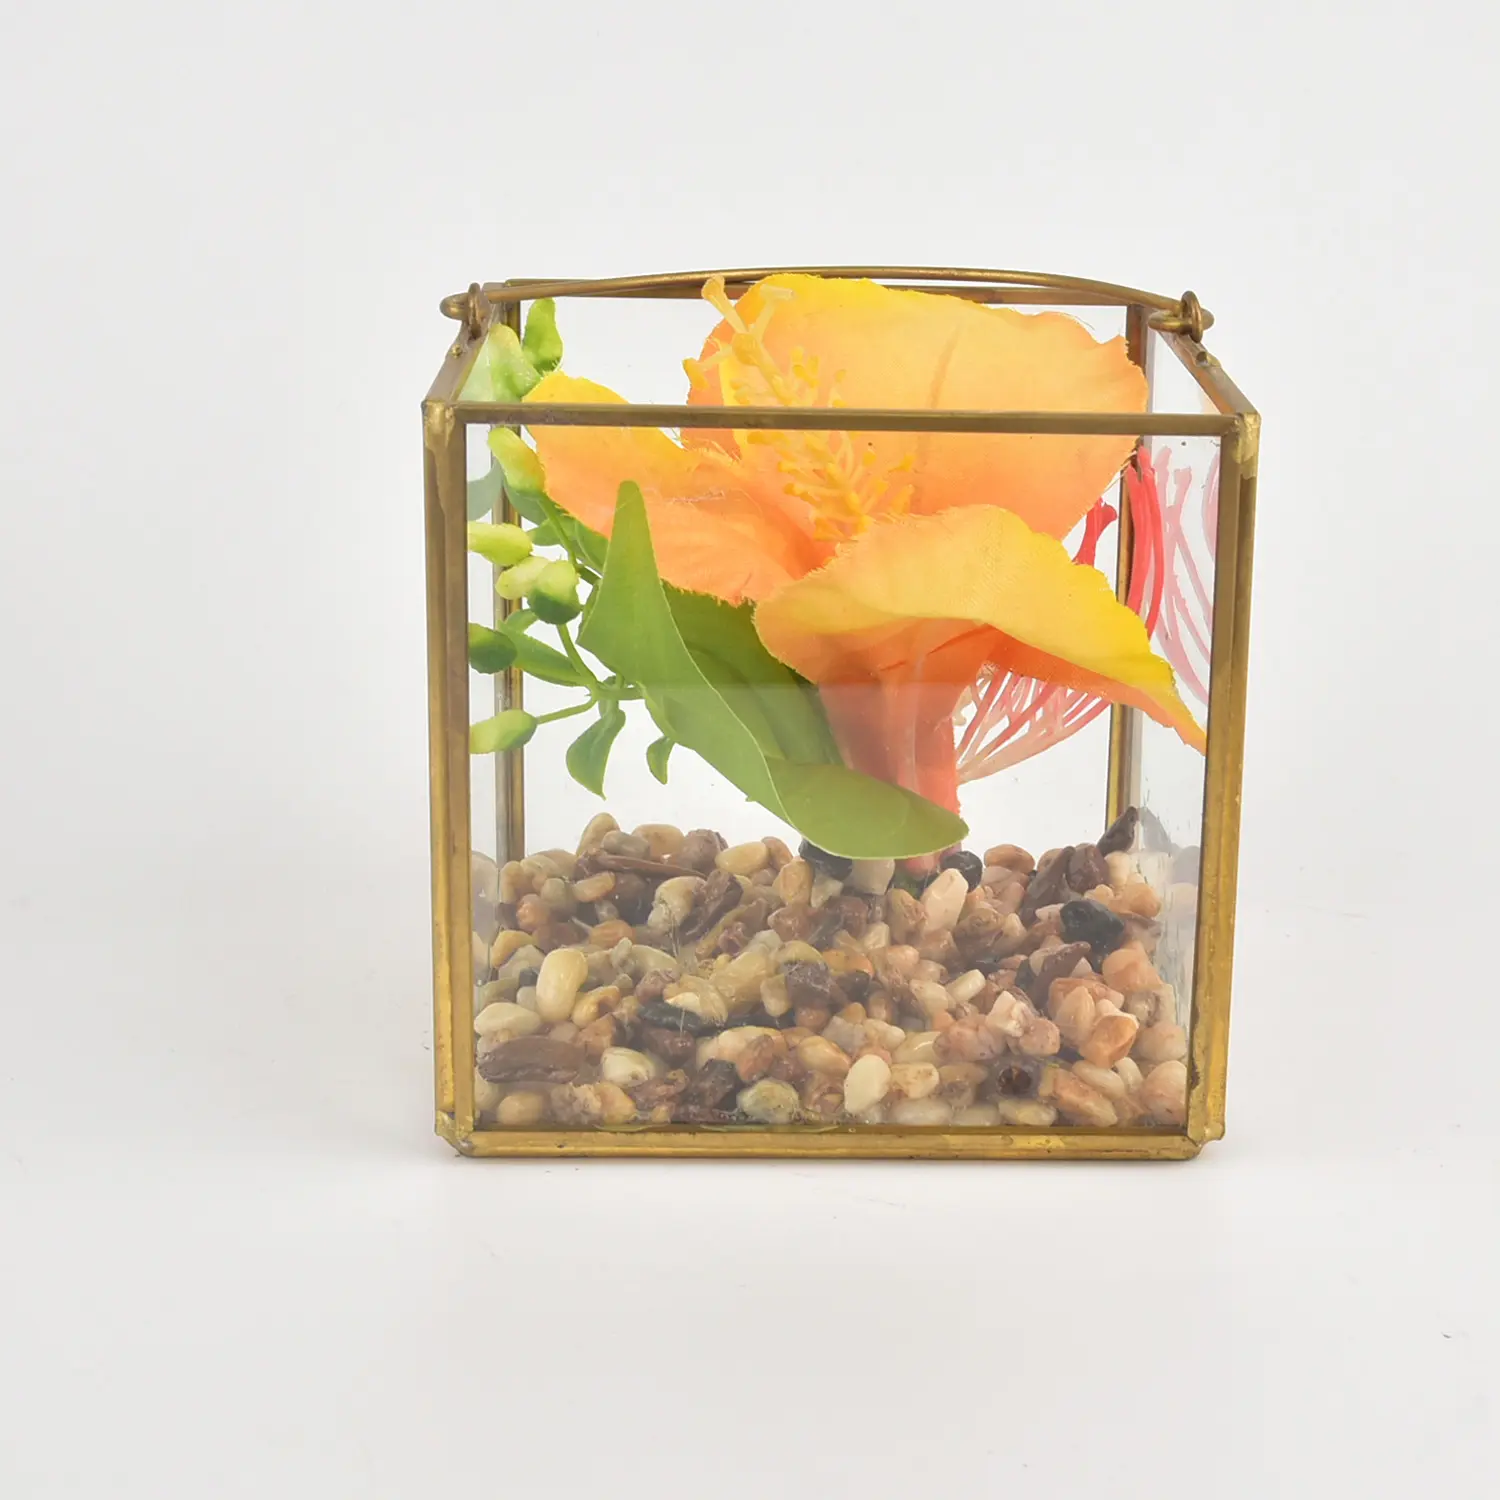 Geométrico cubo dorado vidrio suculenta fibra de vidrio metal artesanía micro paisaje maceta transparente flor casa